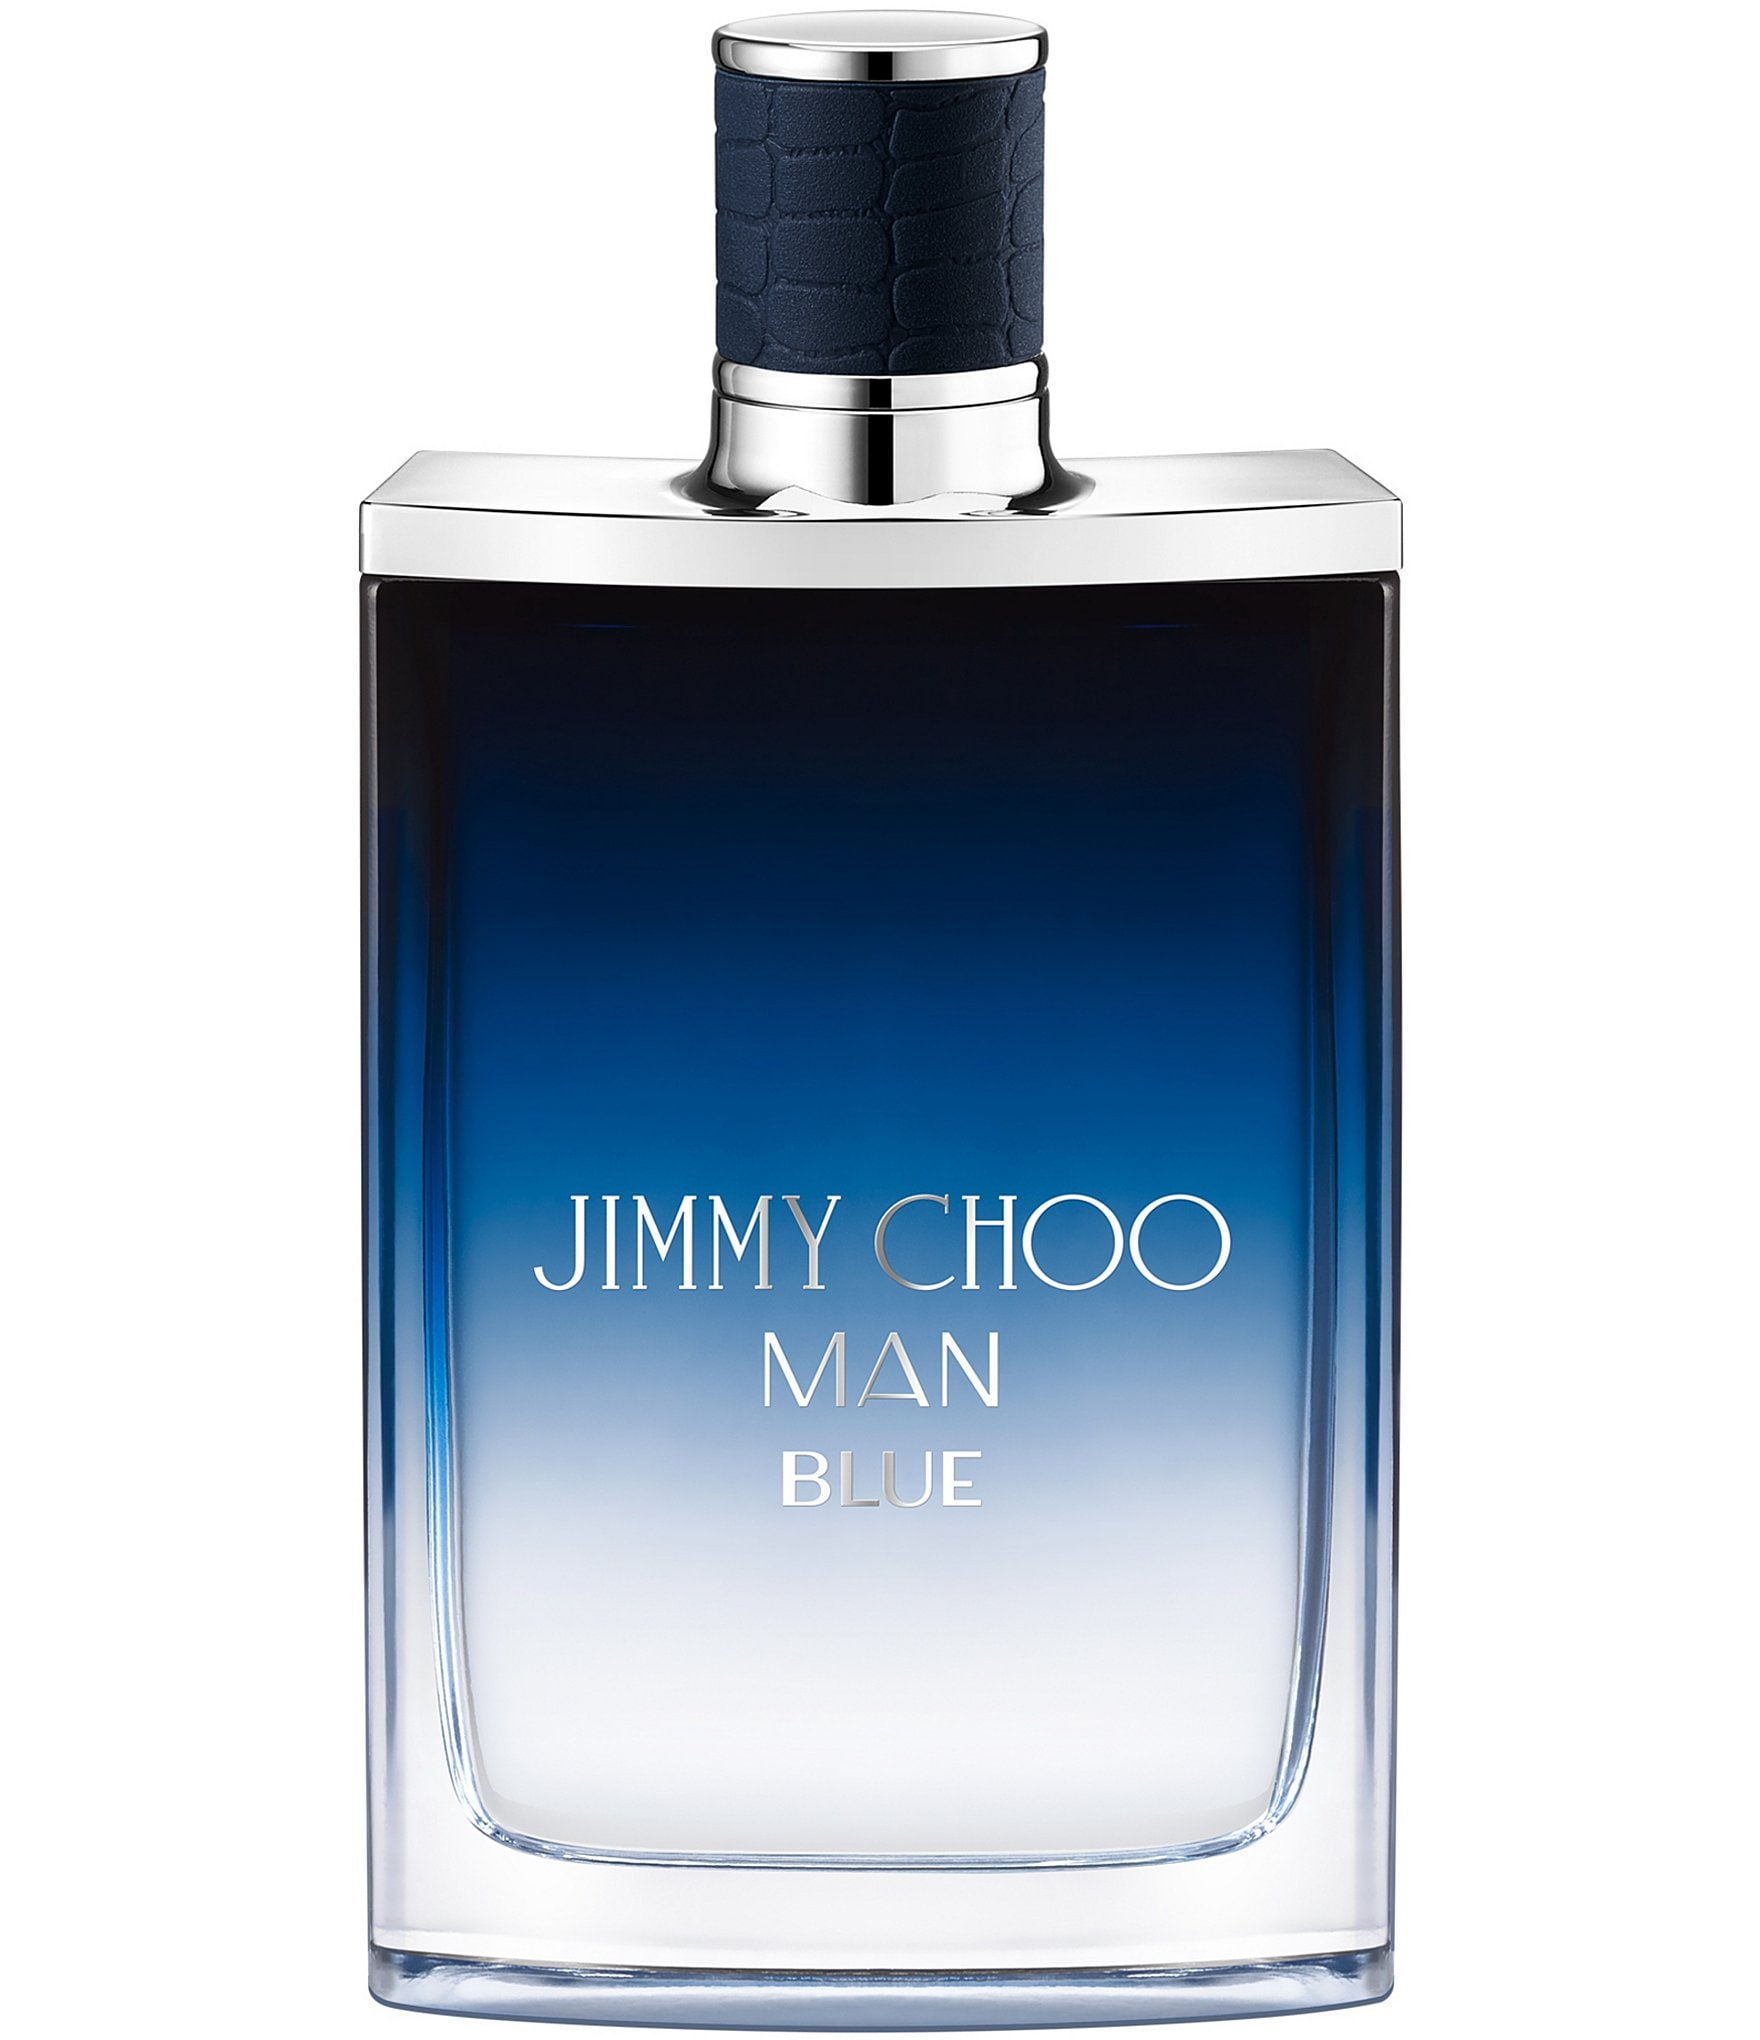 Jimmy Choo Man Blue / Jimmy Choo EDT Spray 3.3 oz (100 ml) (m)  3386460067508 - Fragrances & Beauty, Man Blue - Jomashop